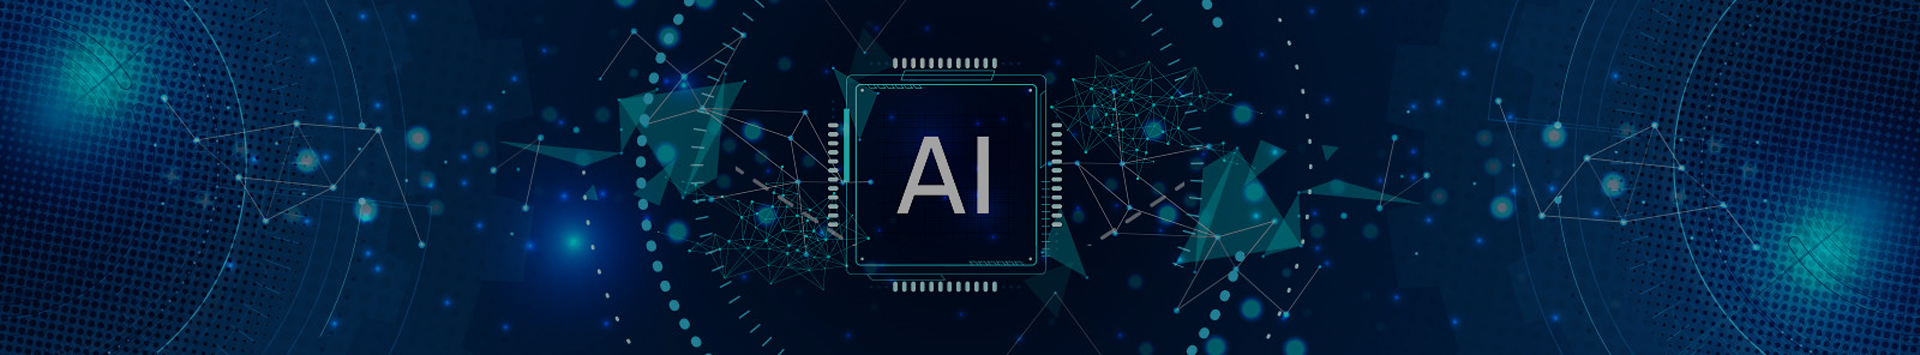 AI-Artificial-Intelligence